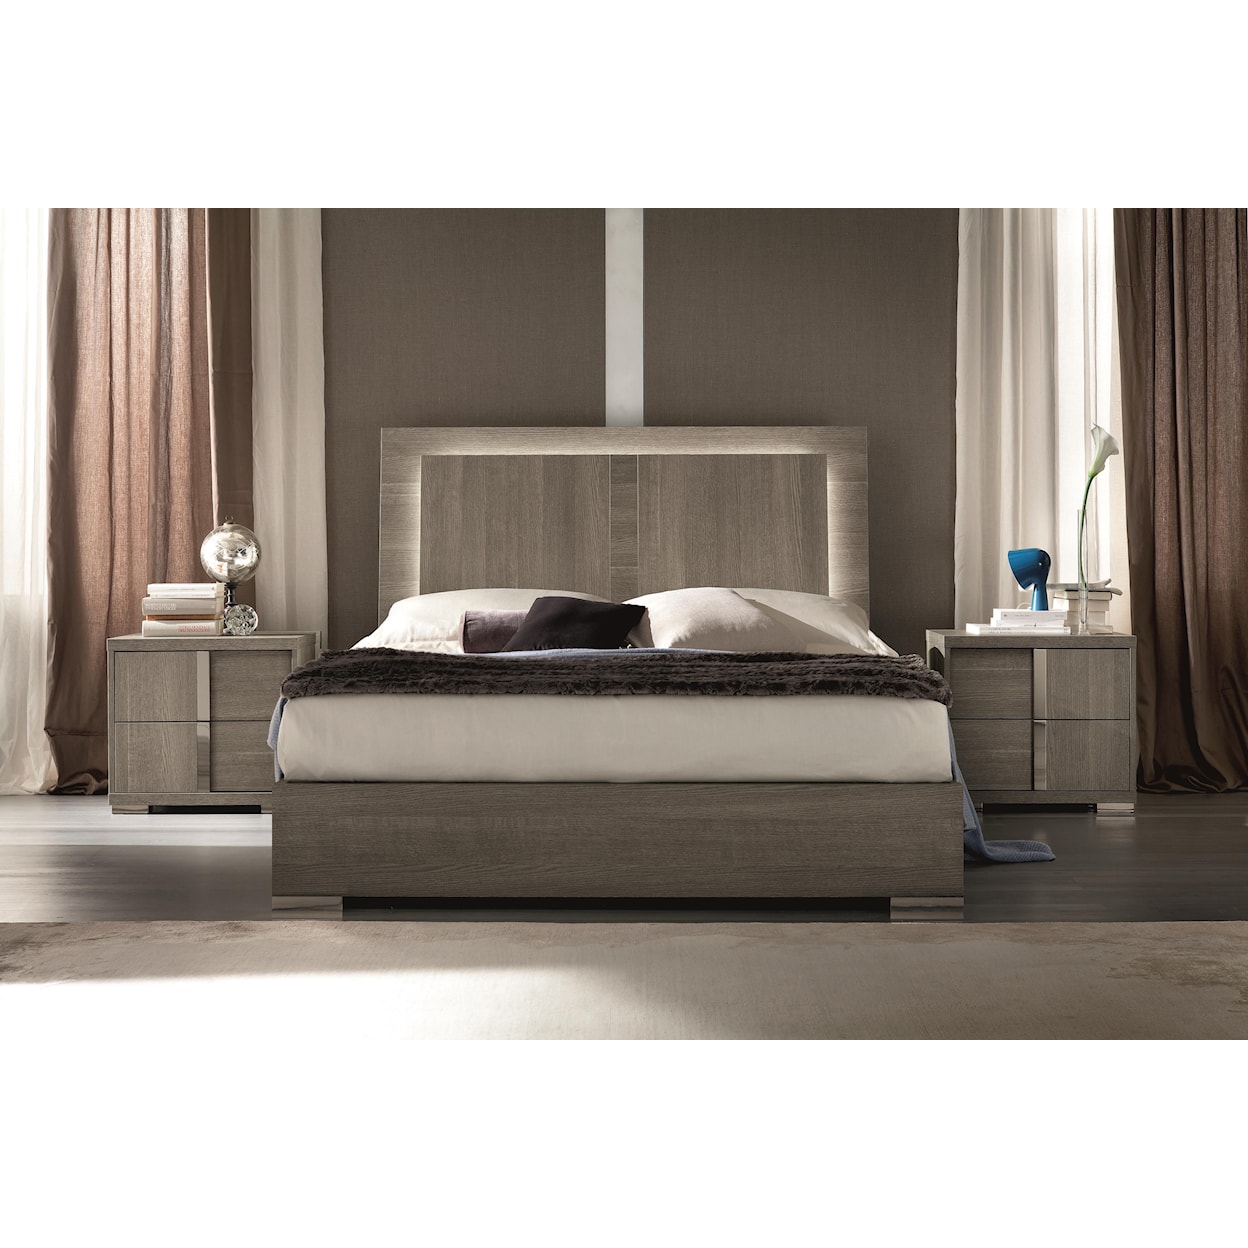 Alf Italia Tivoli CK Bed with LED Light and Storage Drawer